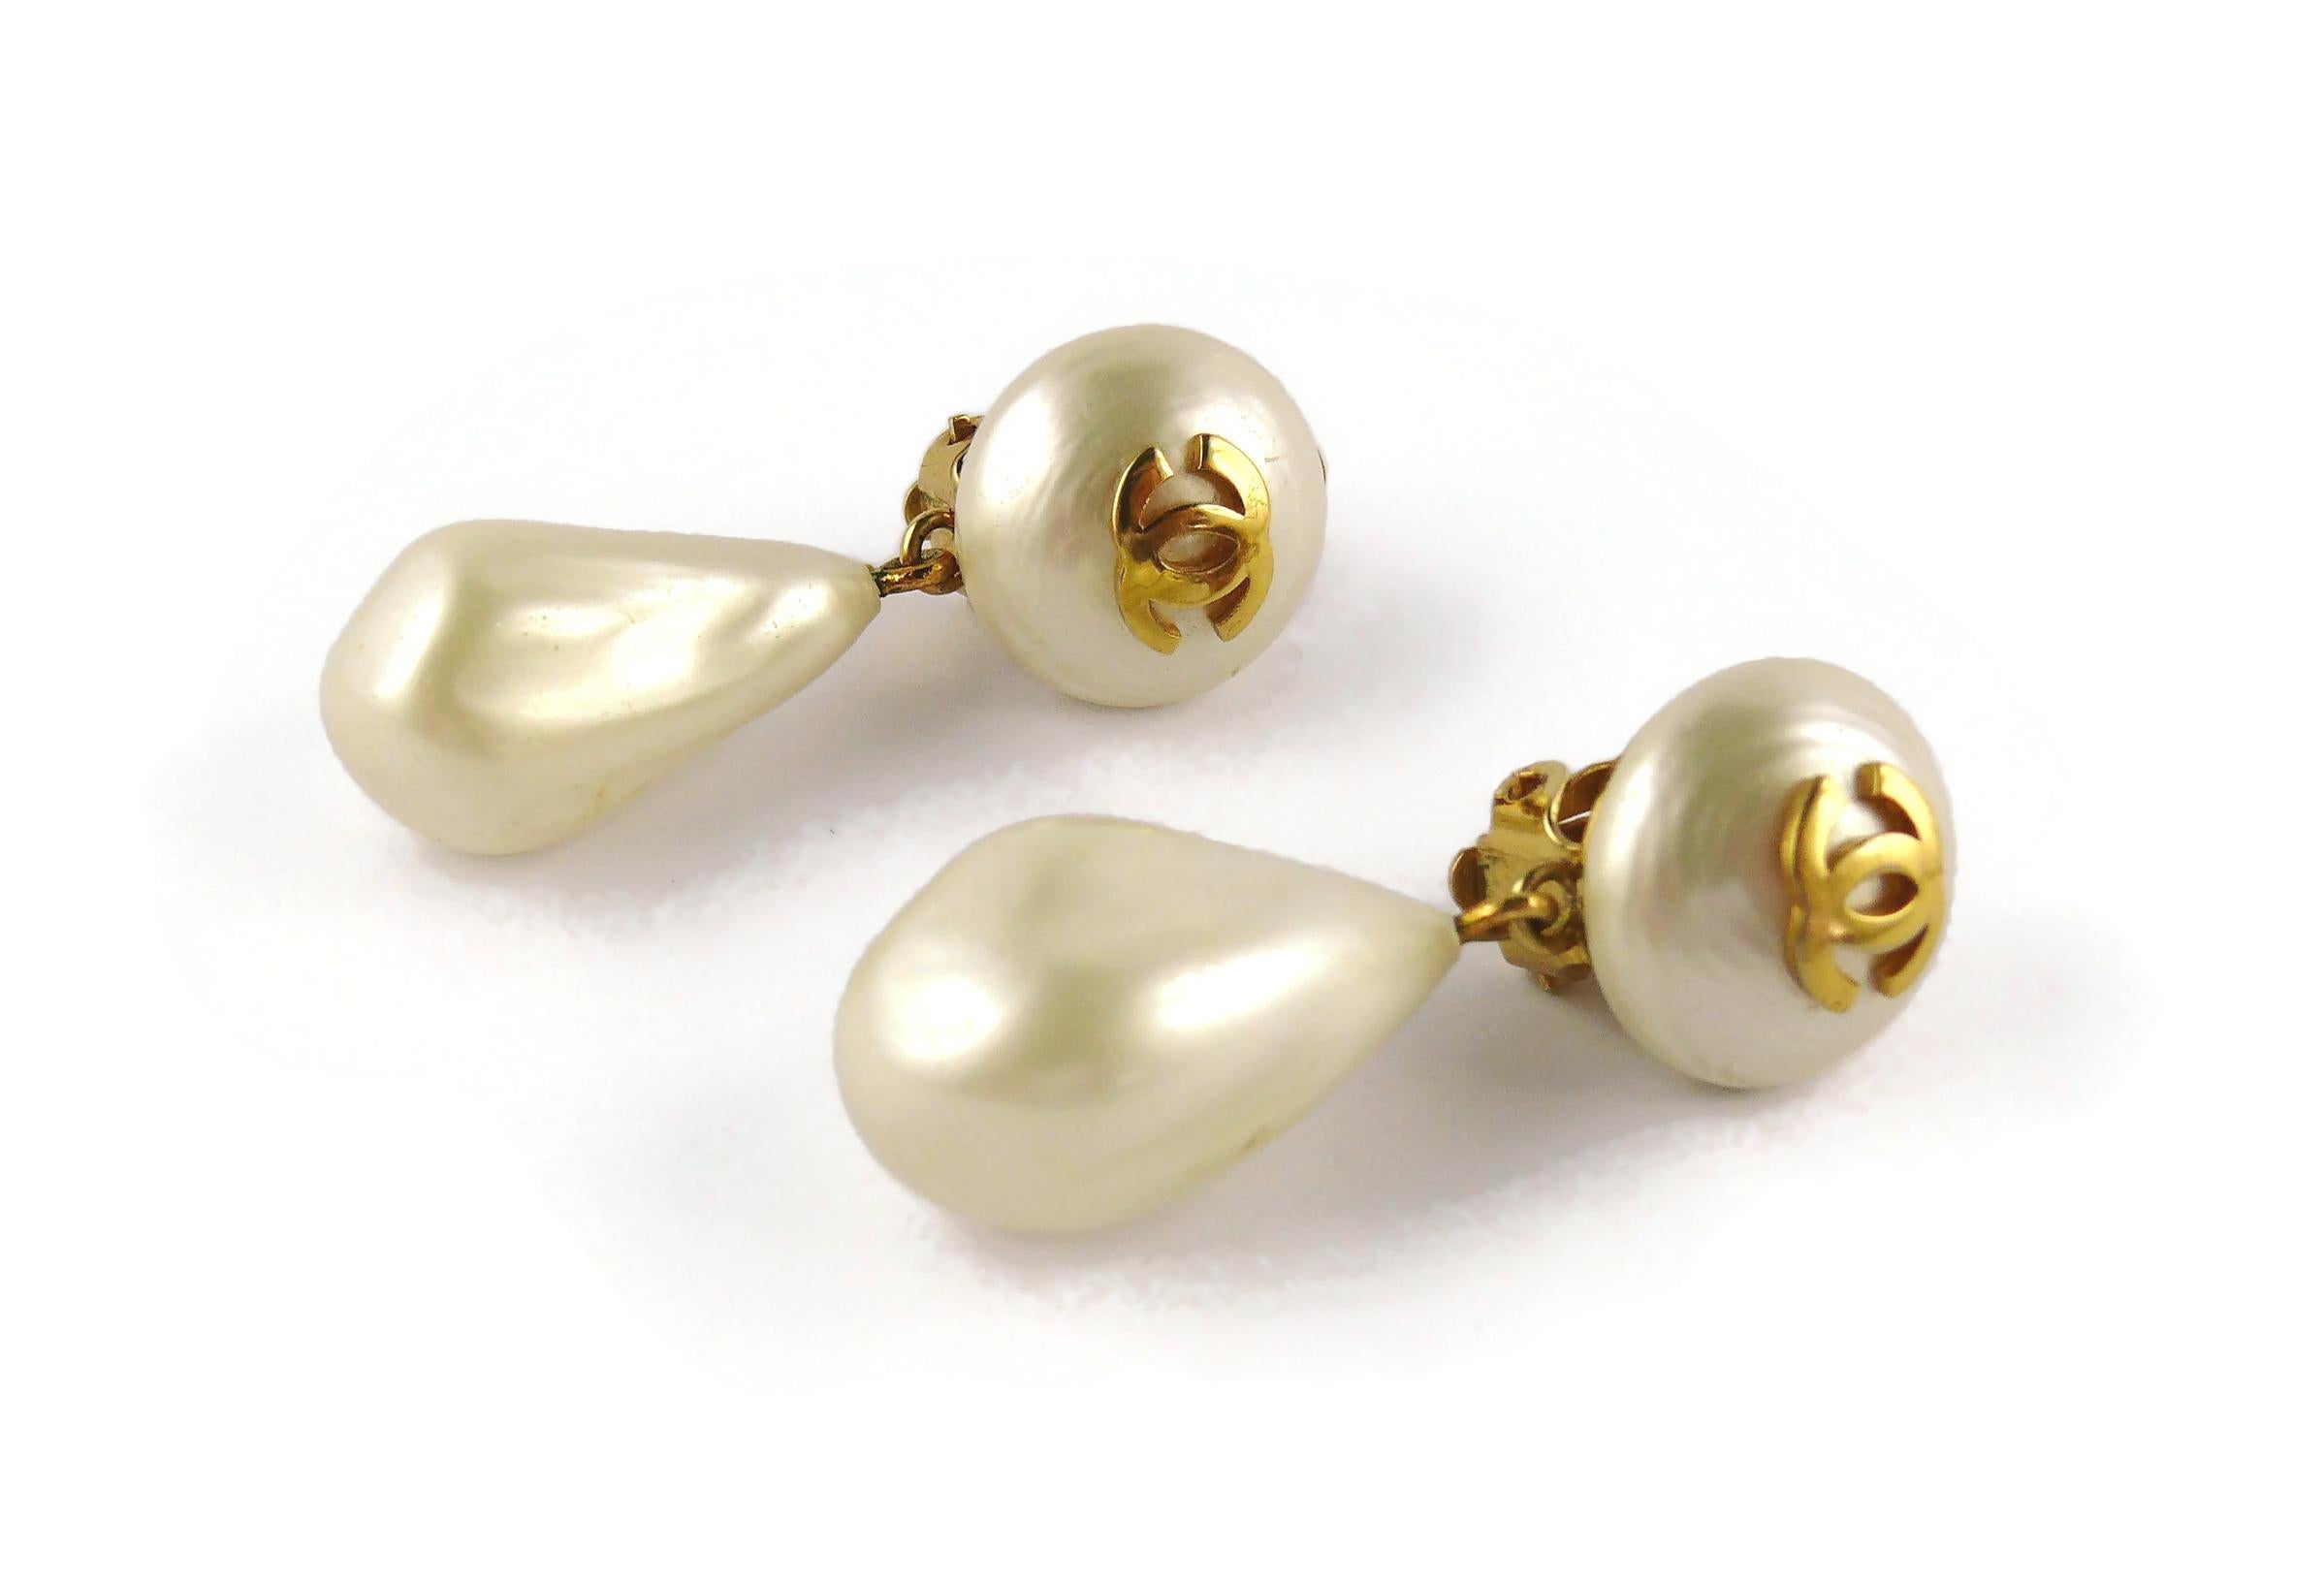 vintage chanel pearl drop earrings